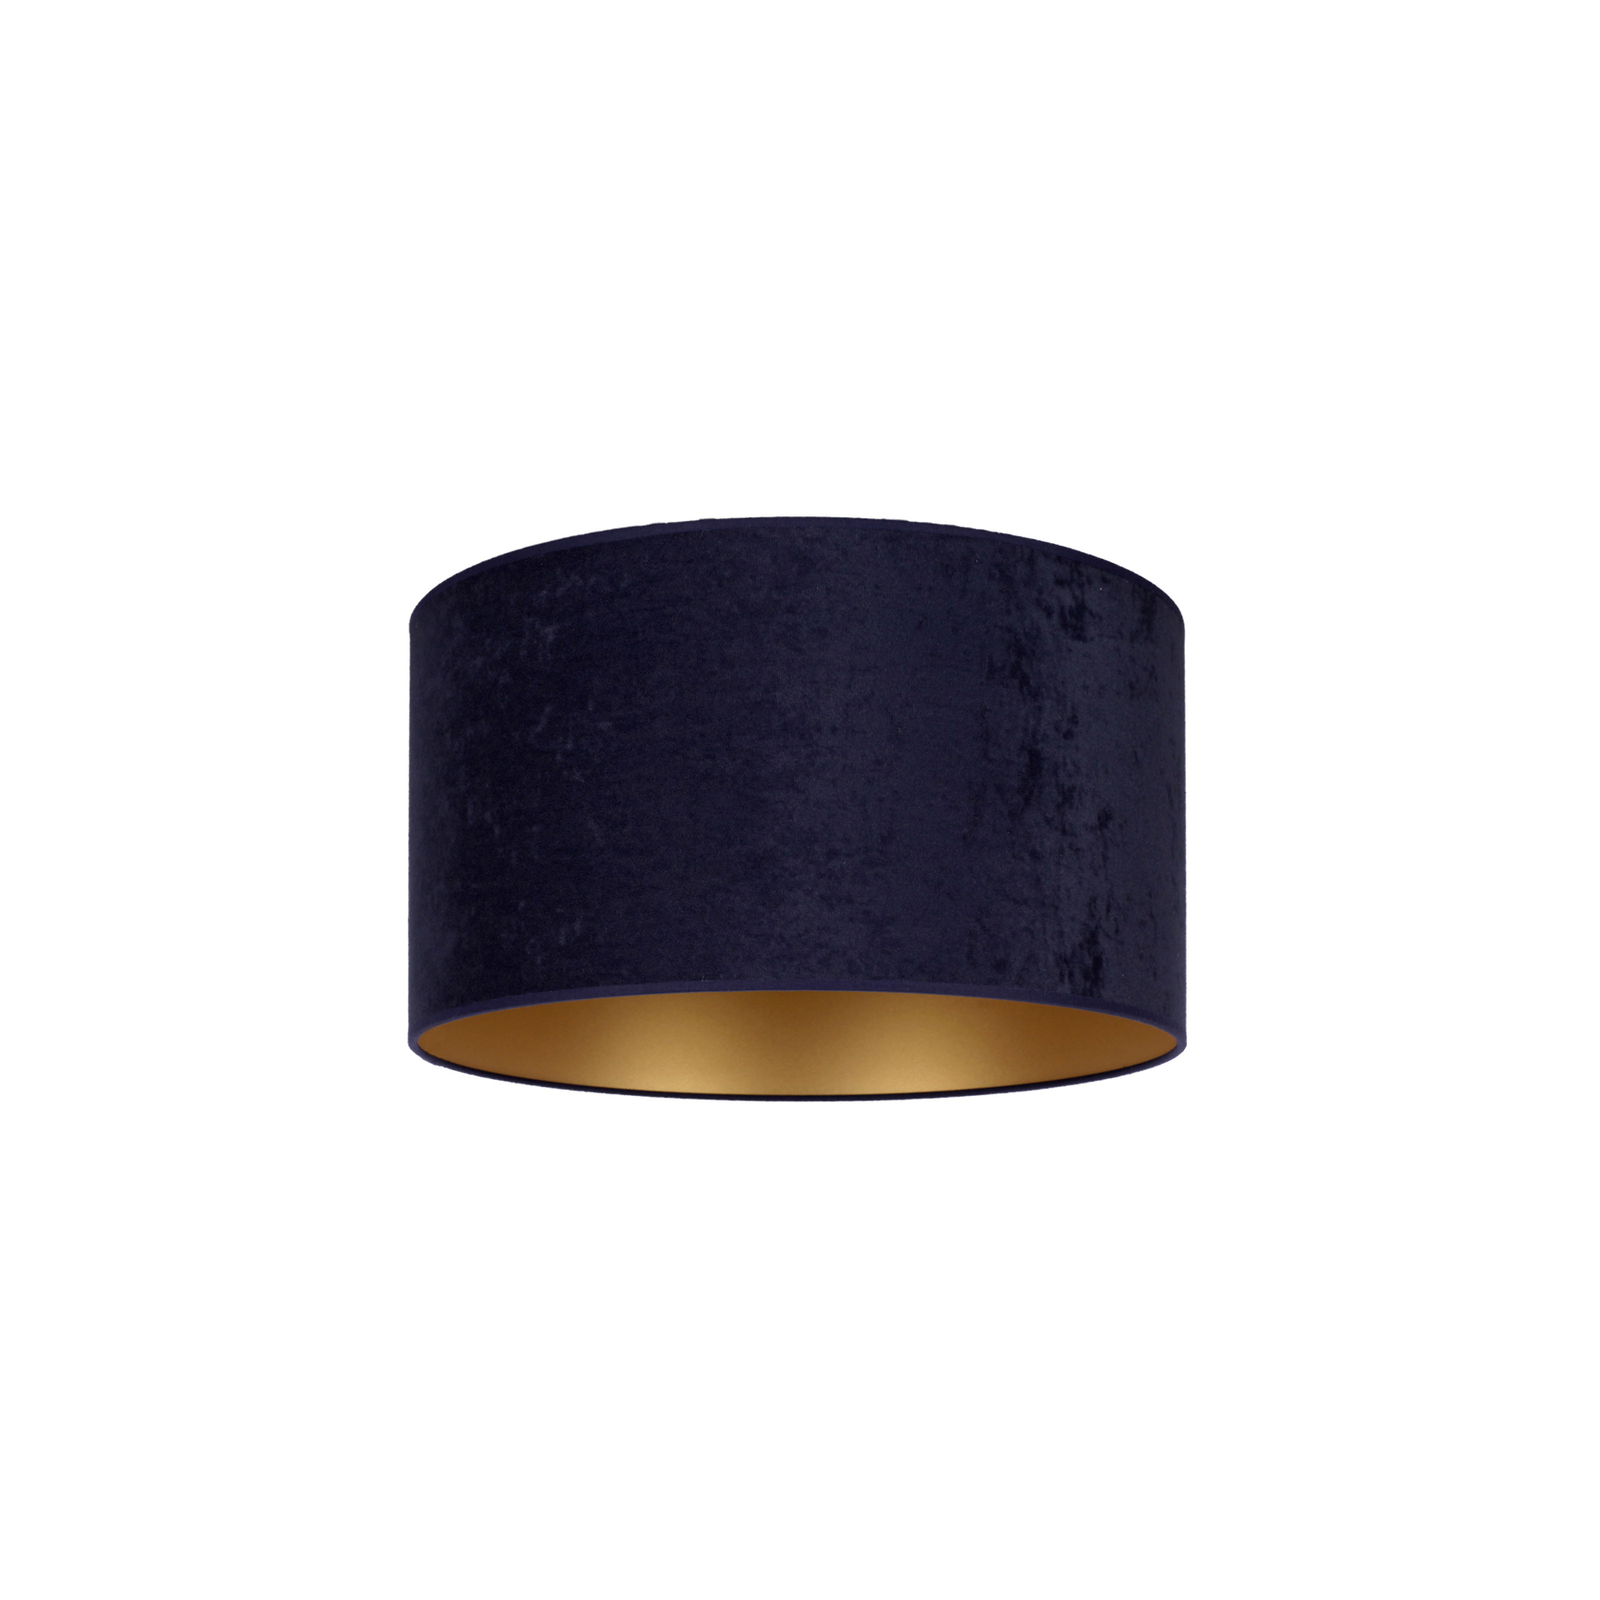 Deckenlampe Golden Roller Ø 40cm dunkelblau/gold